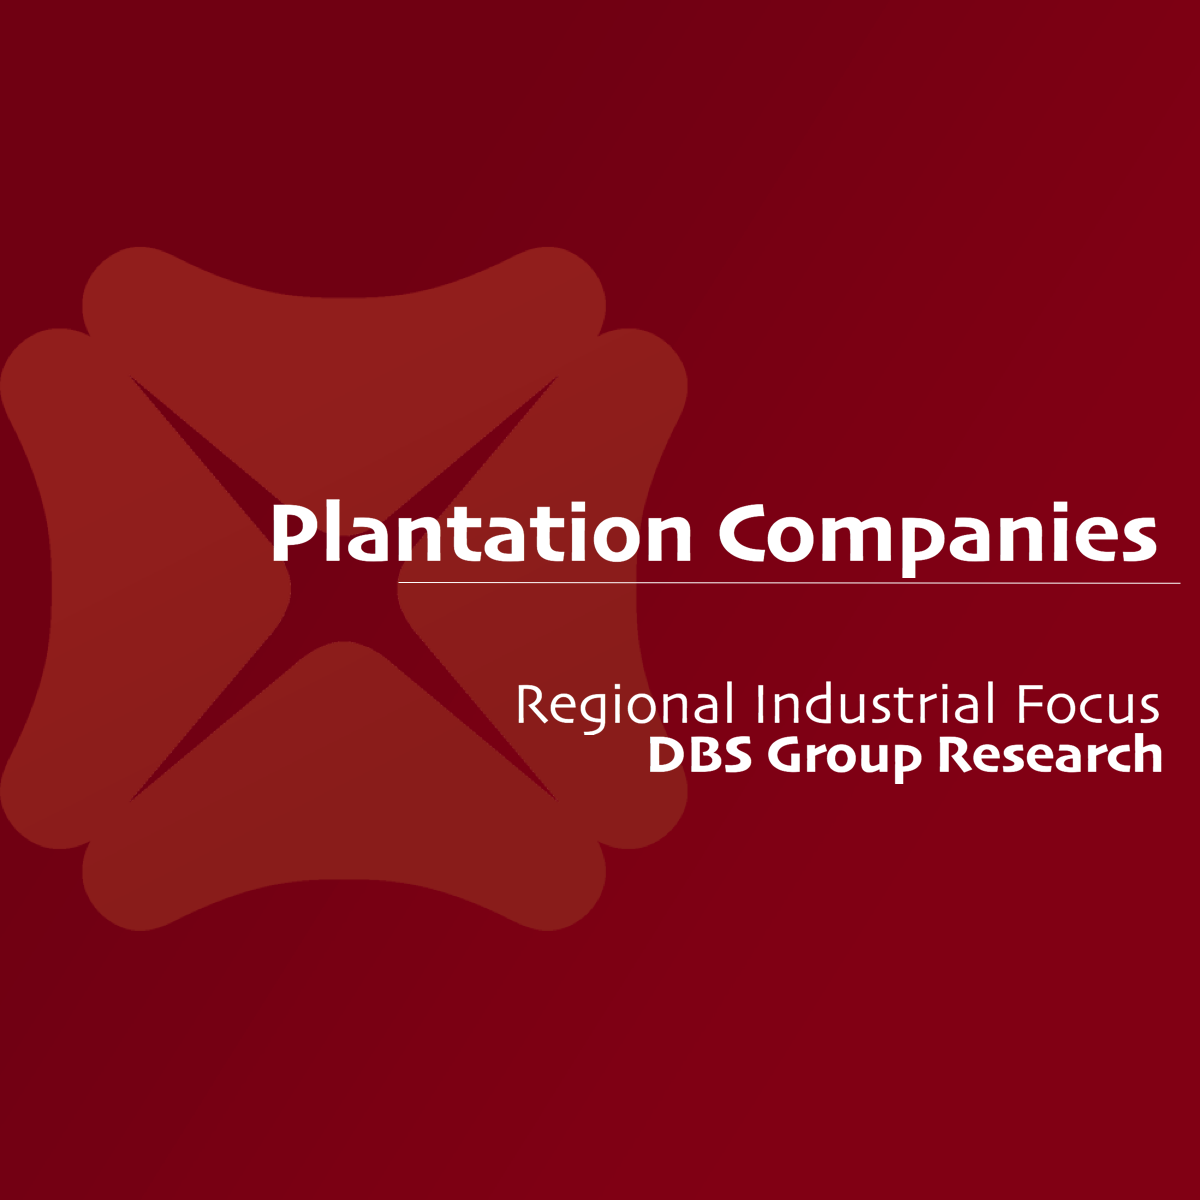 Plantation Companies - DBS Vickers 2017-09-13: CPO Stockpile Still In Healthy Range